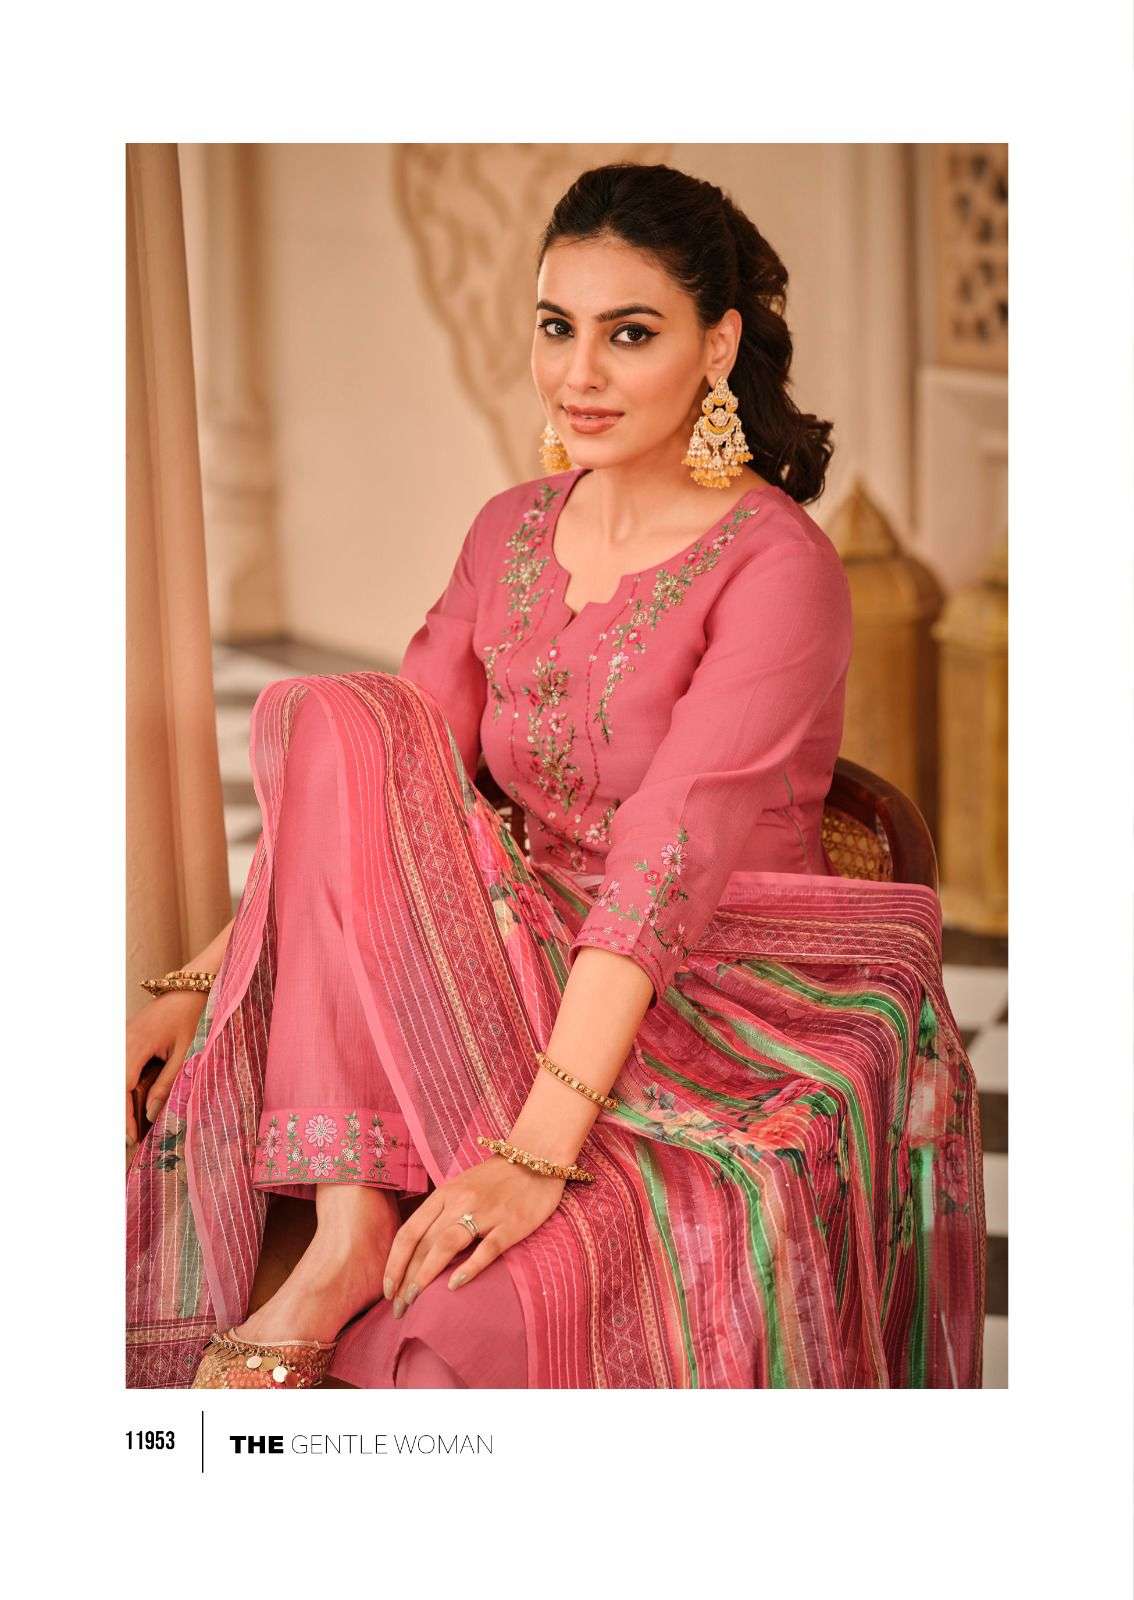 liy and lali zoya 11951-11956 series premium designer dress catalogue online wholesaler surat